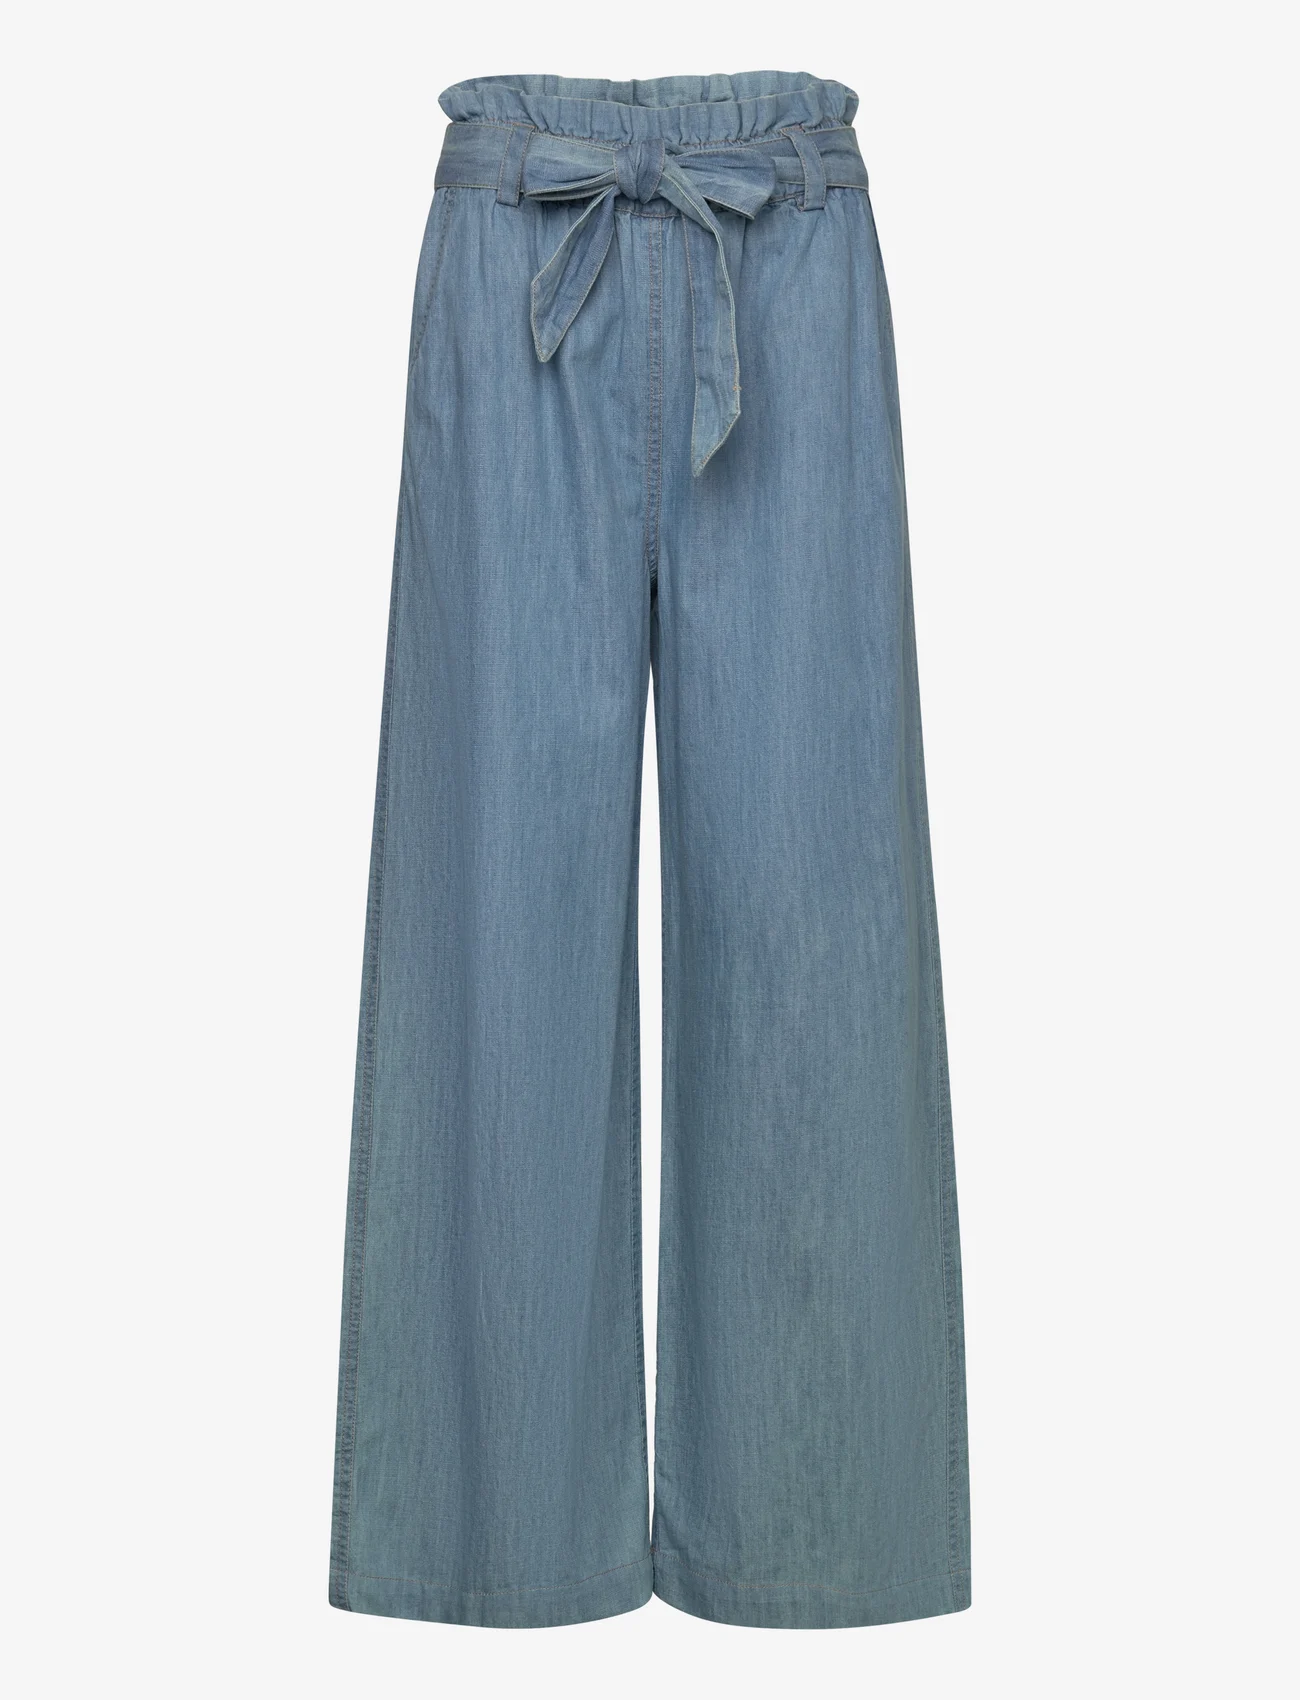 Lollys Laundry - Vicky Pants - wide leg trousers - light blue - 0